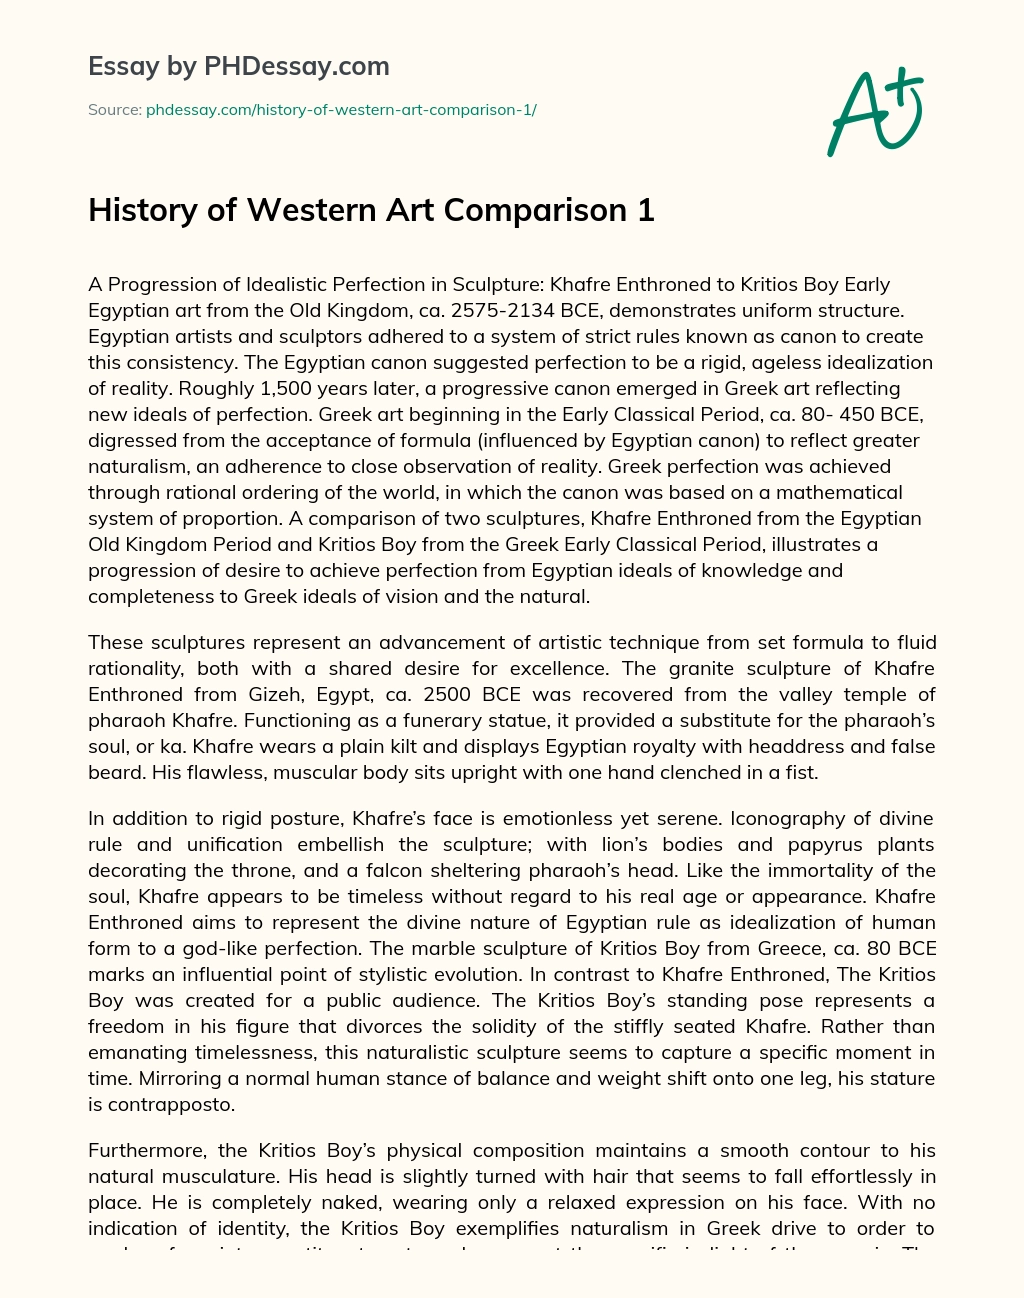 History of Western Art Comparison 1 essay